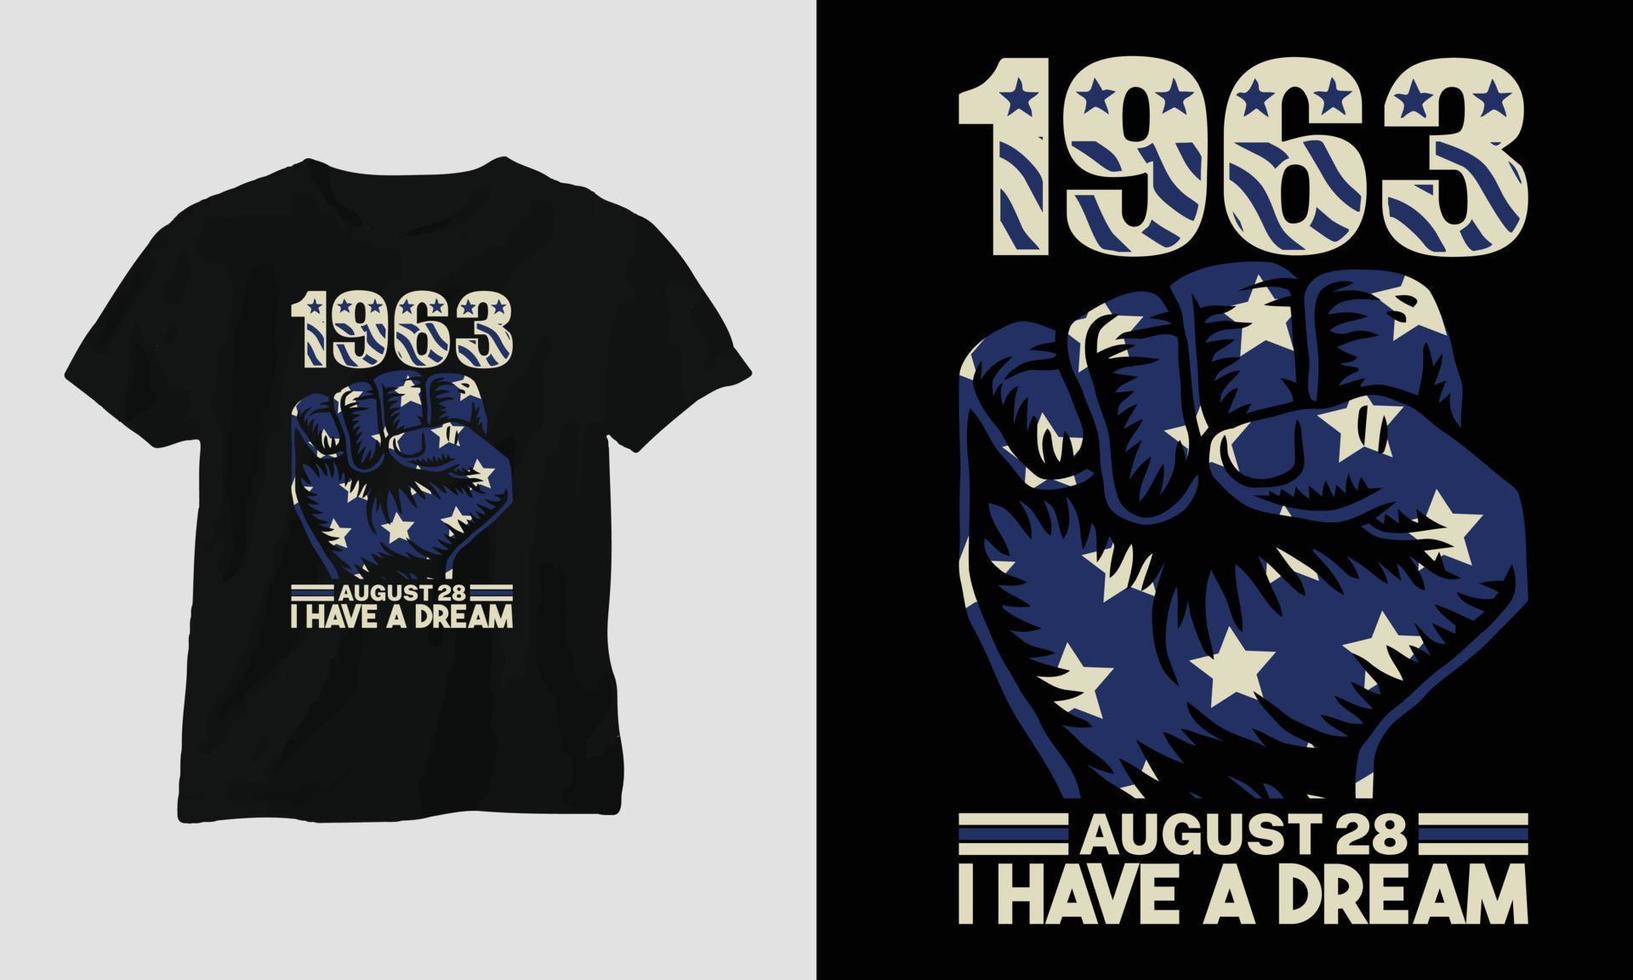 1963 28. august ich habe einen traum - martin luther king jr. tag t-shirt design im usa-thema mit band, faust, flagge vektor